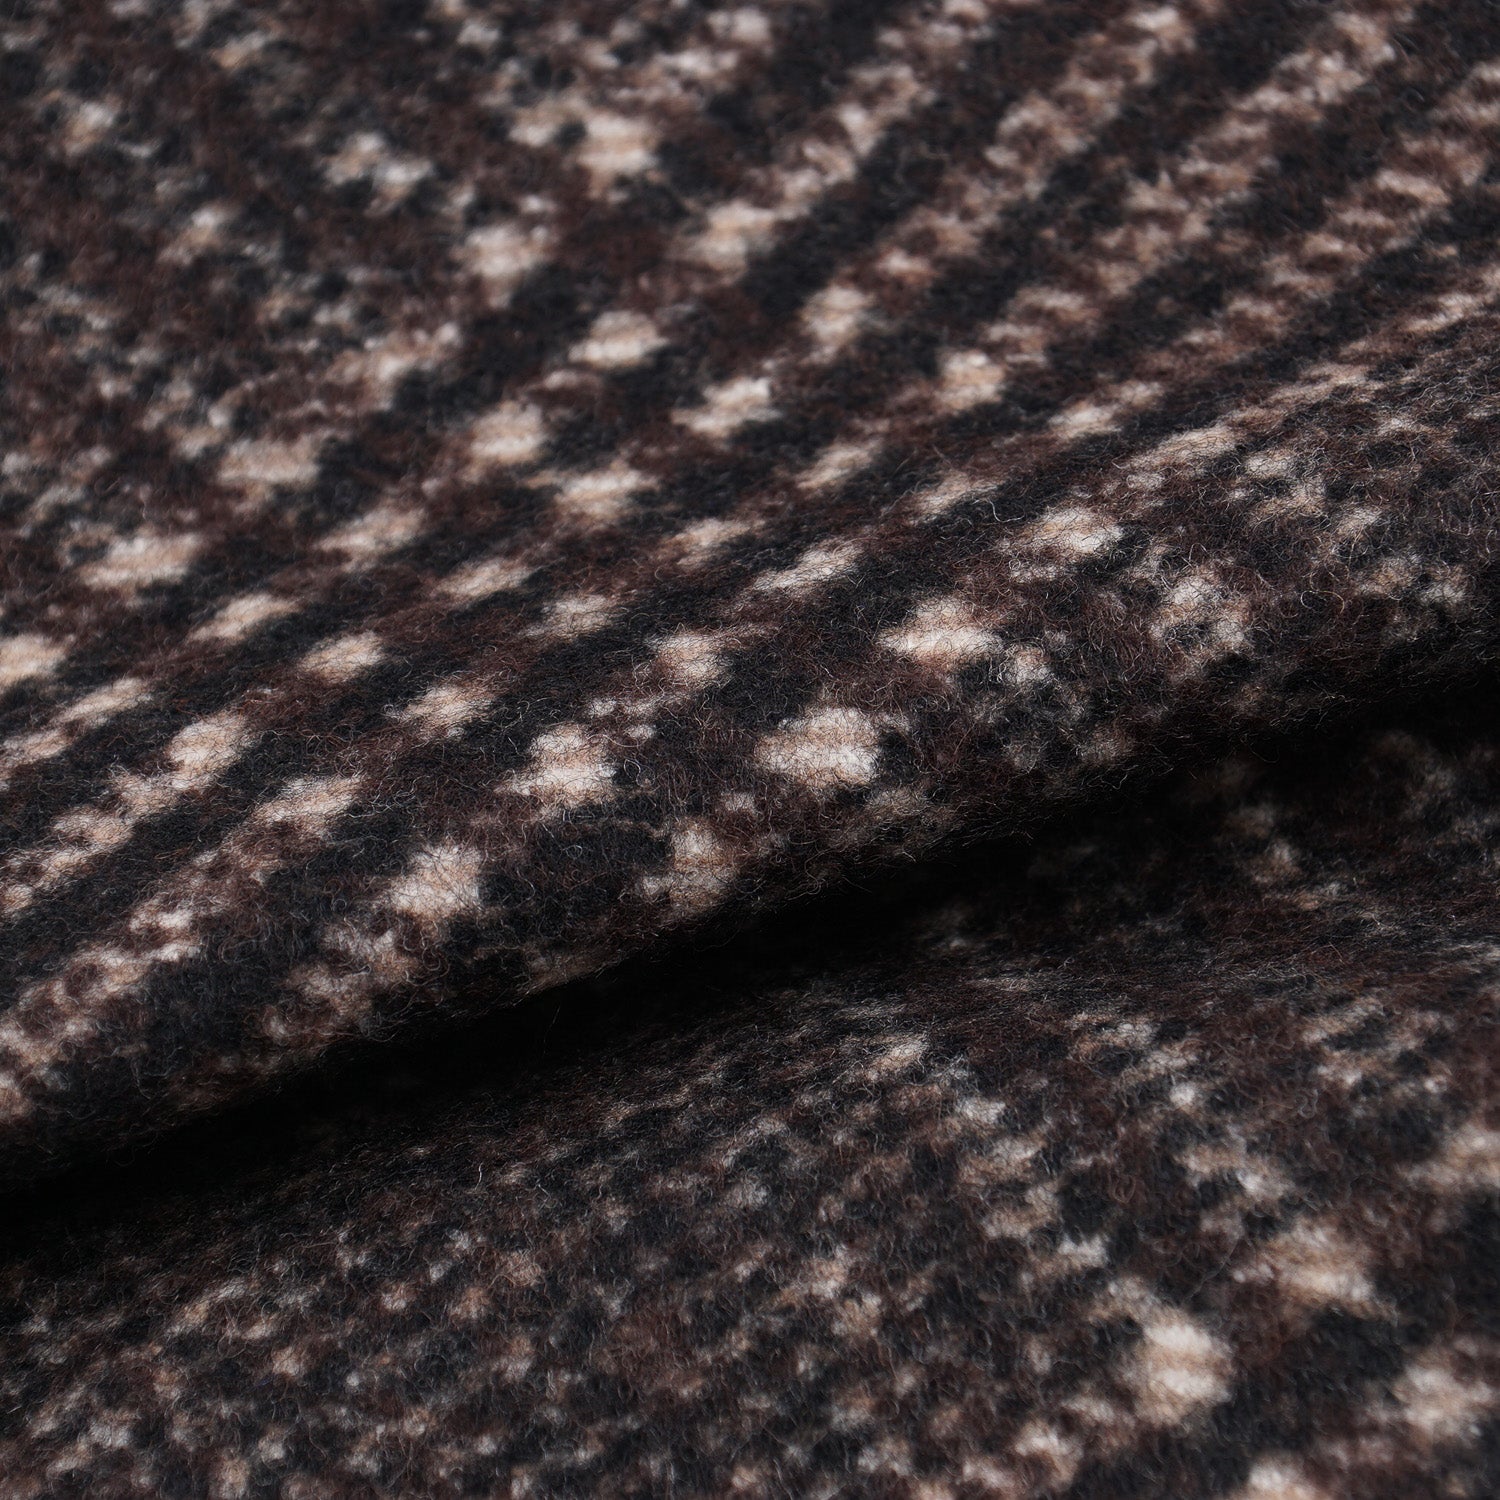 Drumohr Wool and Alpaca Shirt-Jacket - Top Shelf Apparel